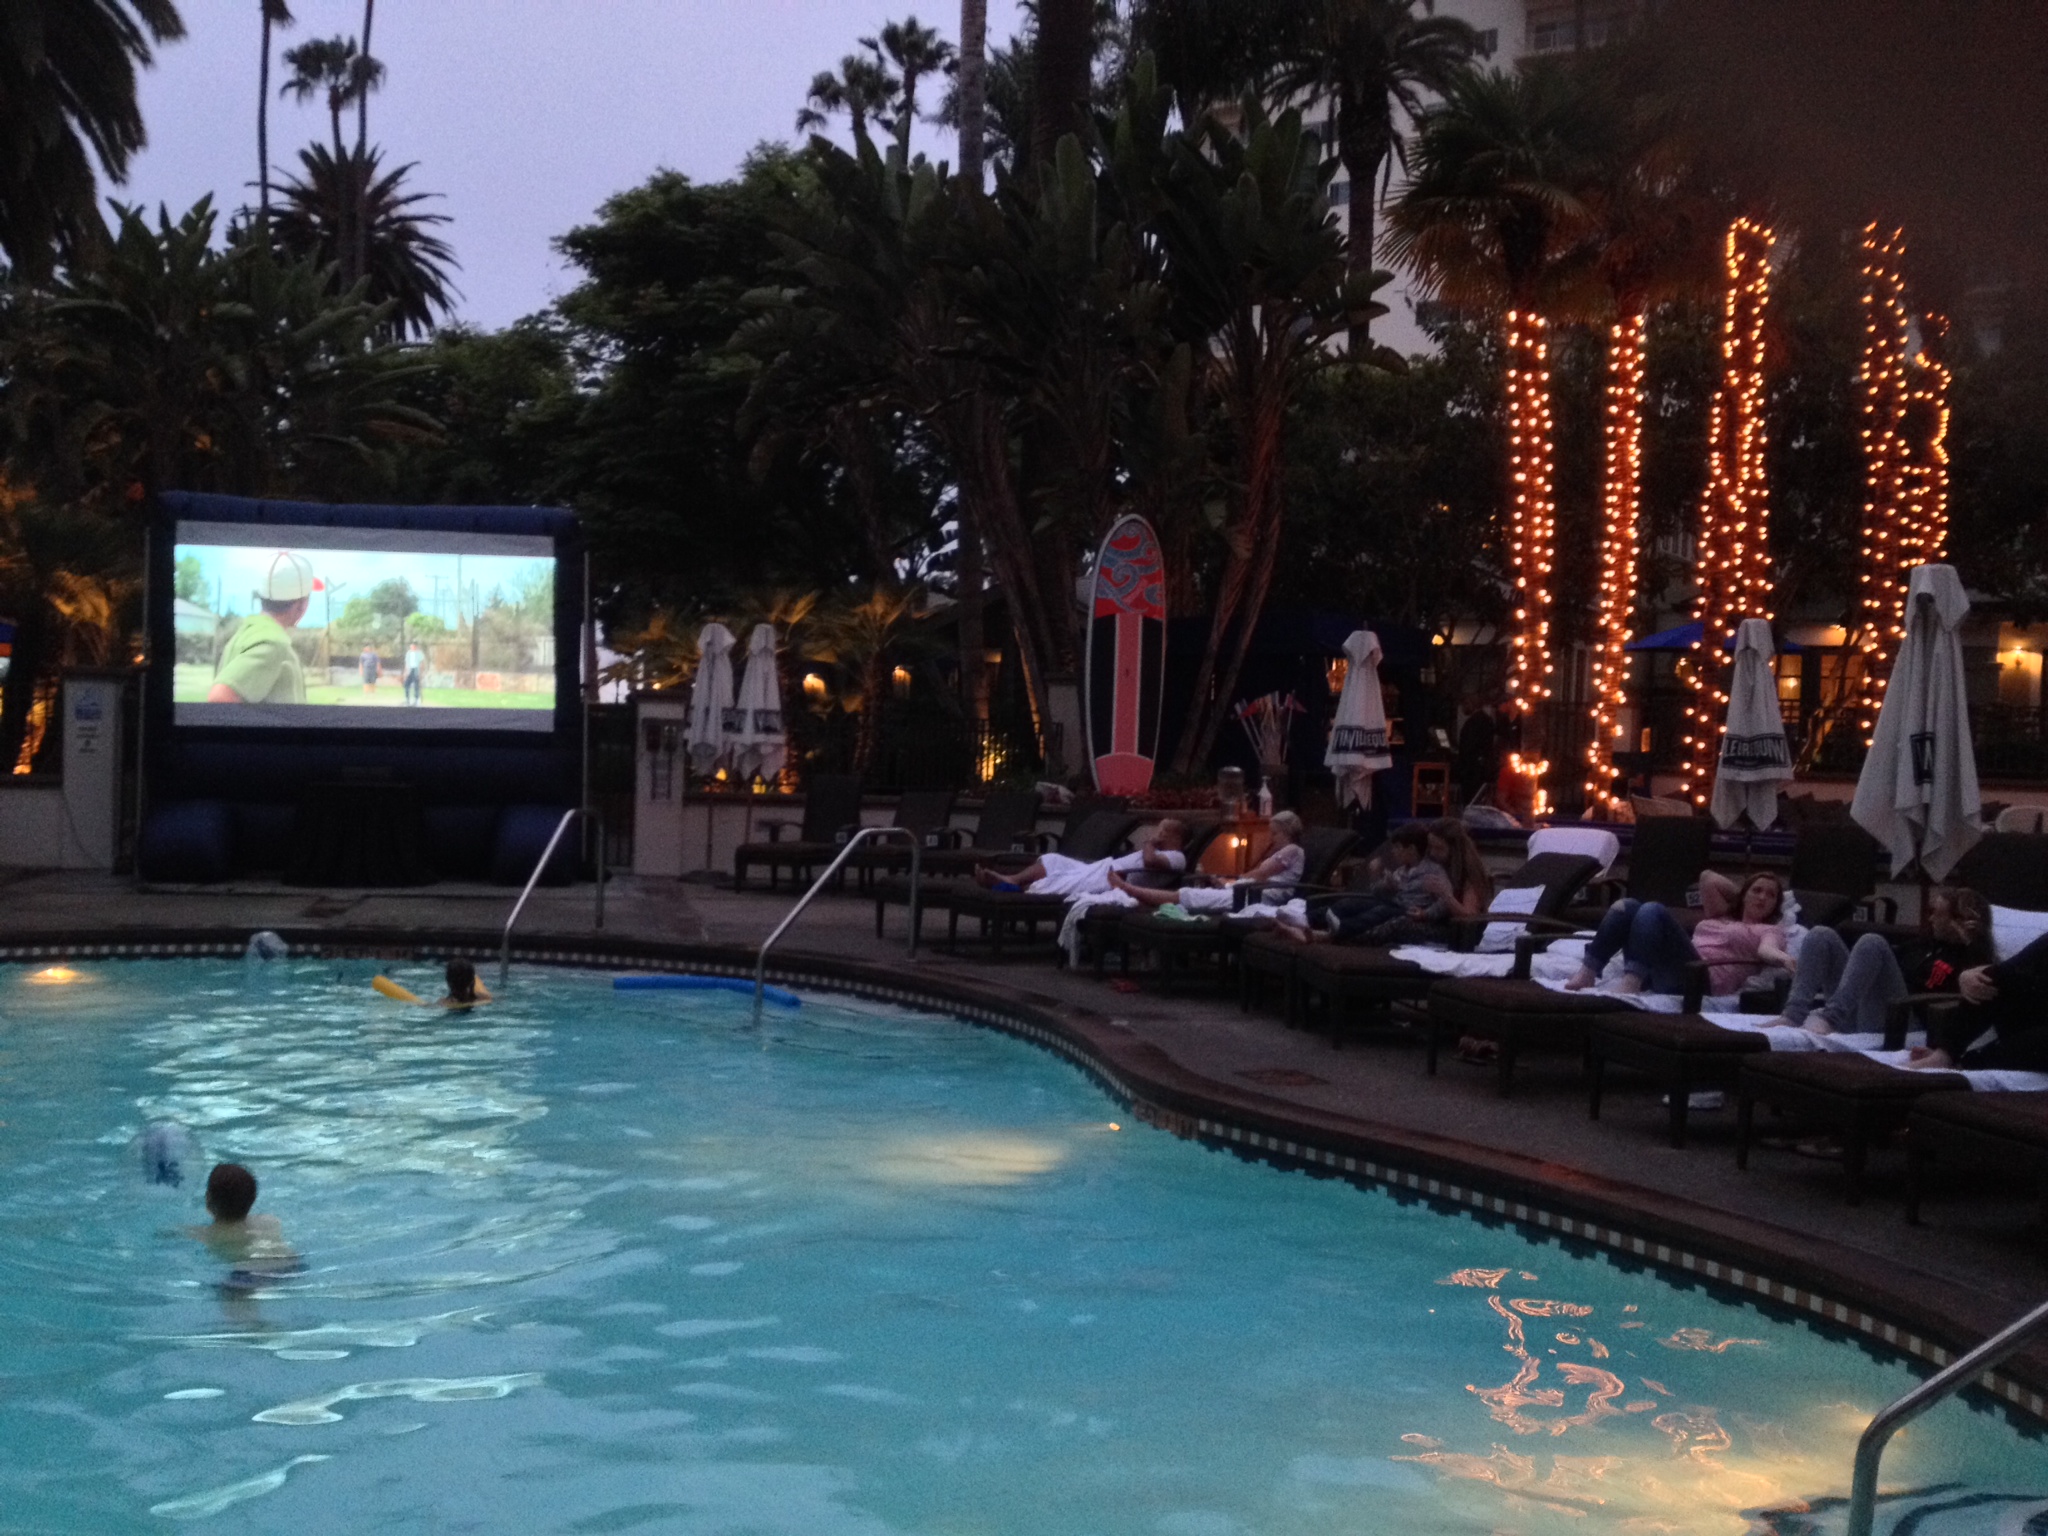 Starry Night Poolside Cinema at the Miramar Pool Club